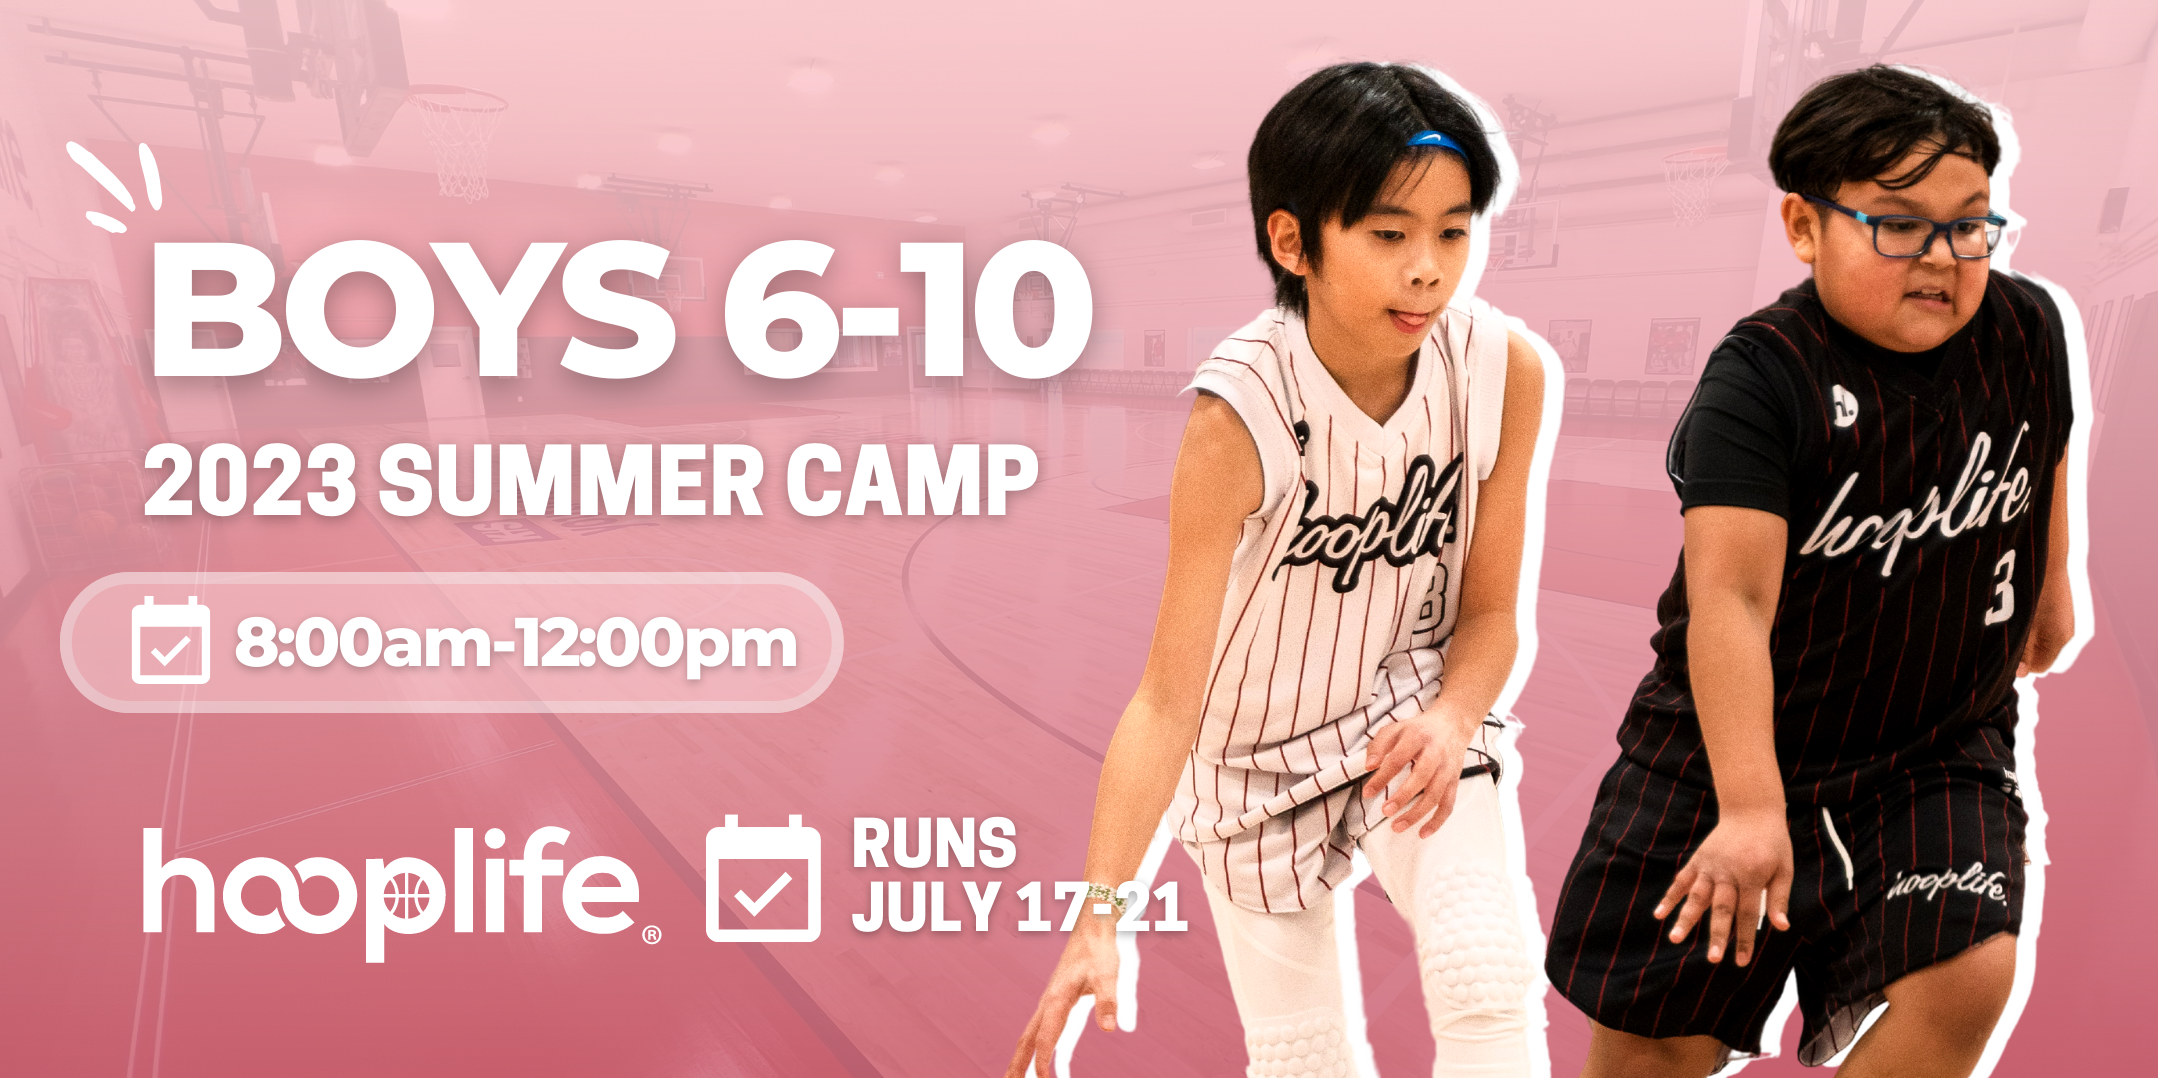 Boys 6-10 Summer Camp | July 17-21